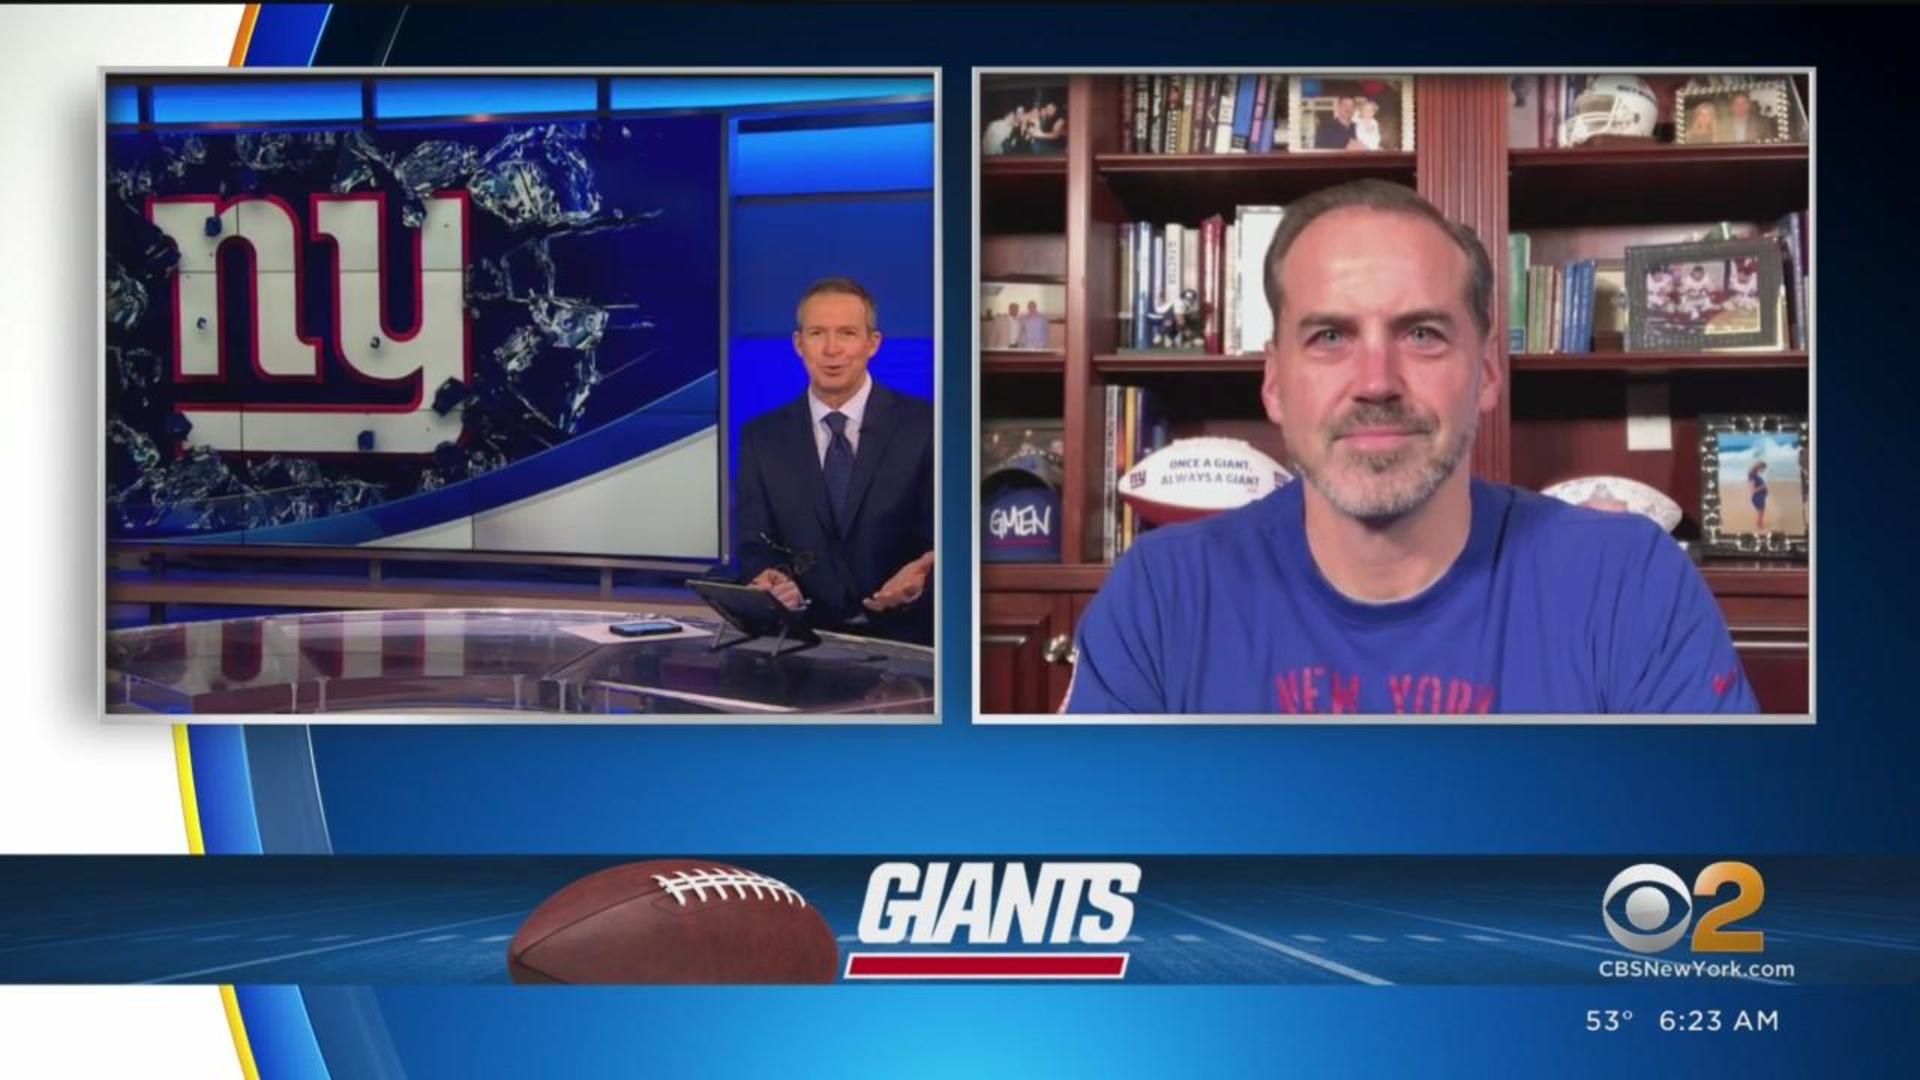 Big Blue Friday with Giants' legend Shaun O'Hara - CBS New York